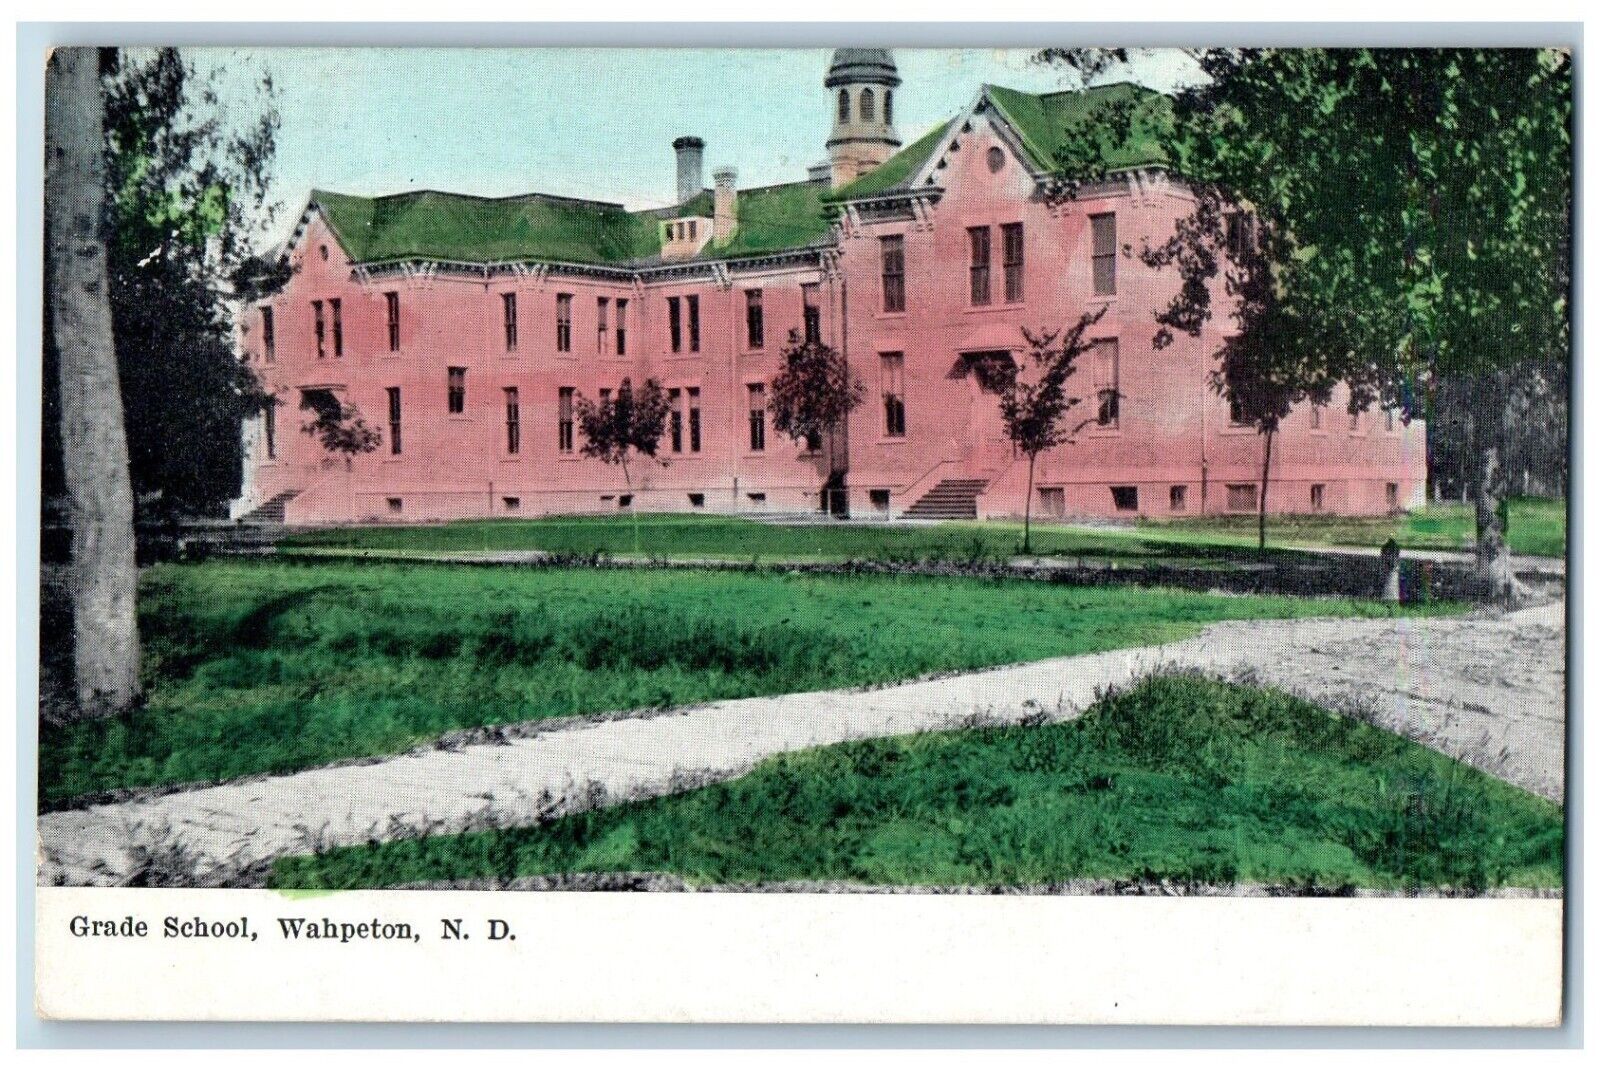 Wahpeton North Dakota Postcard Grade School c1908 Exterior View Vintage Antique